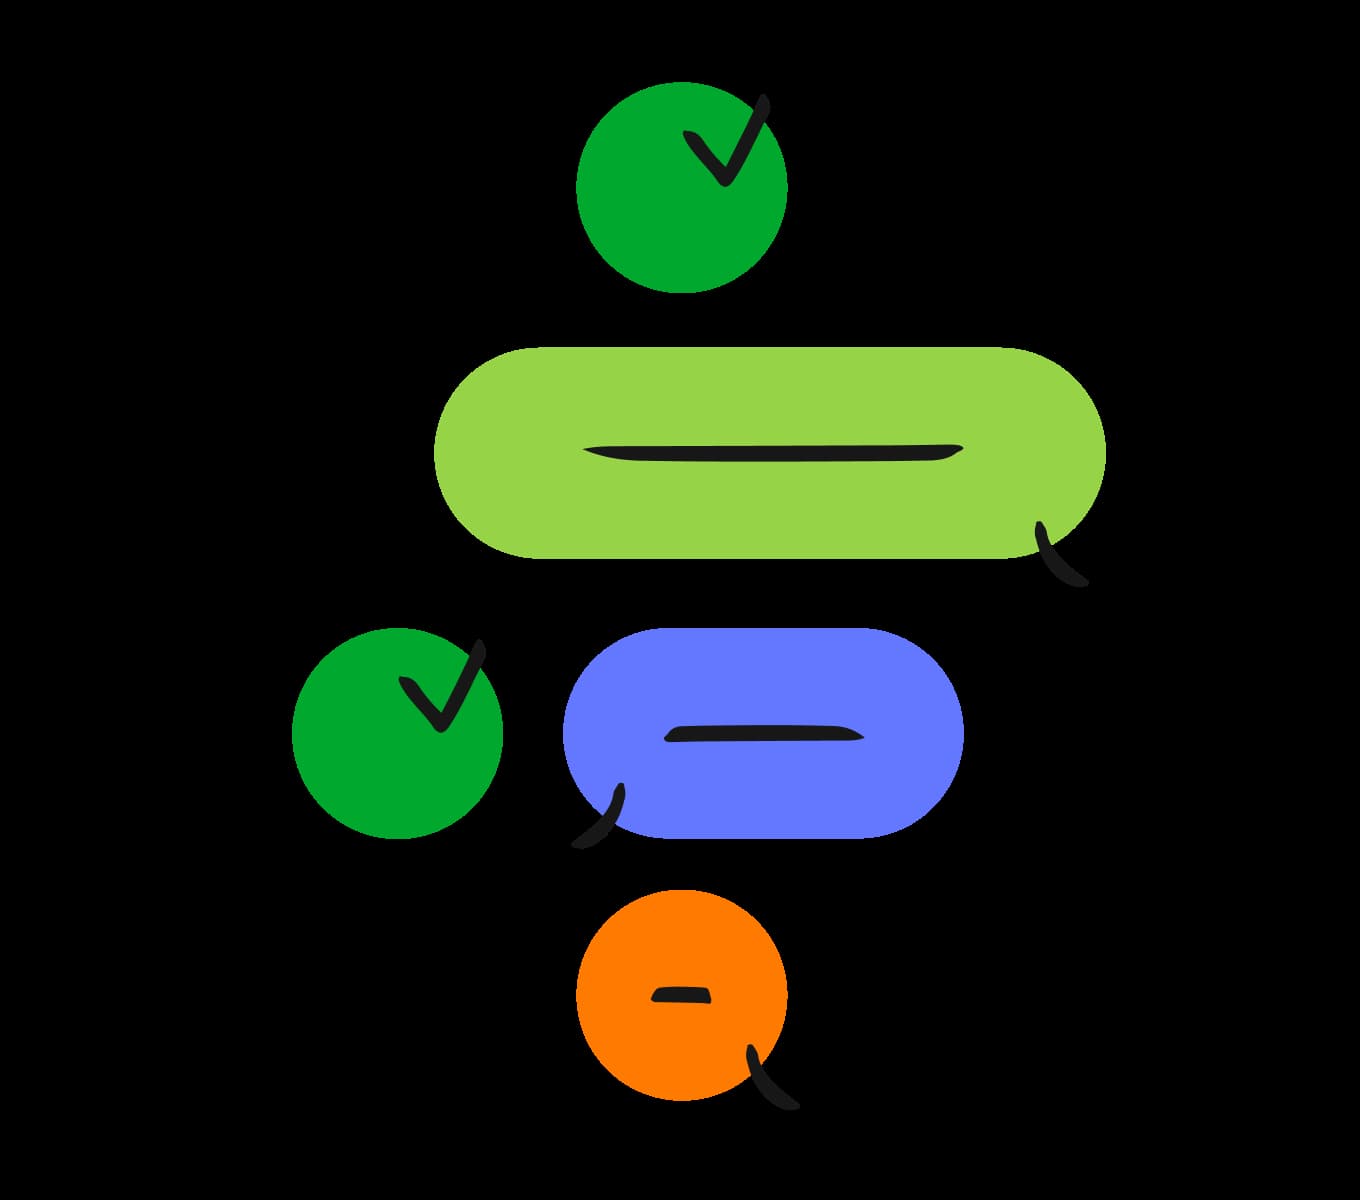 A UI rappresentation of collaboration